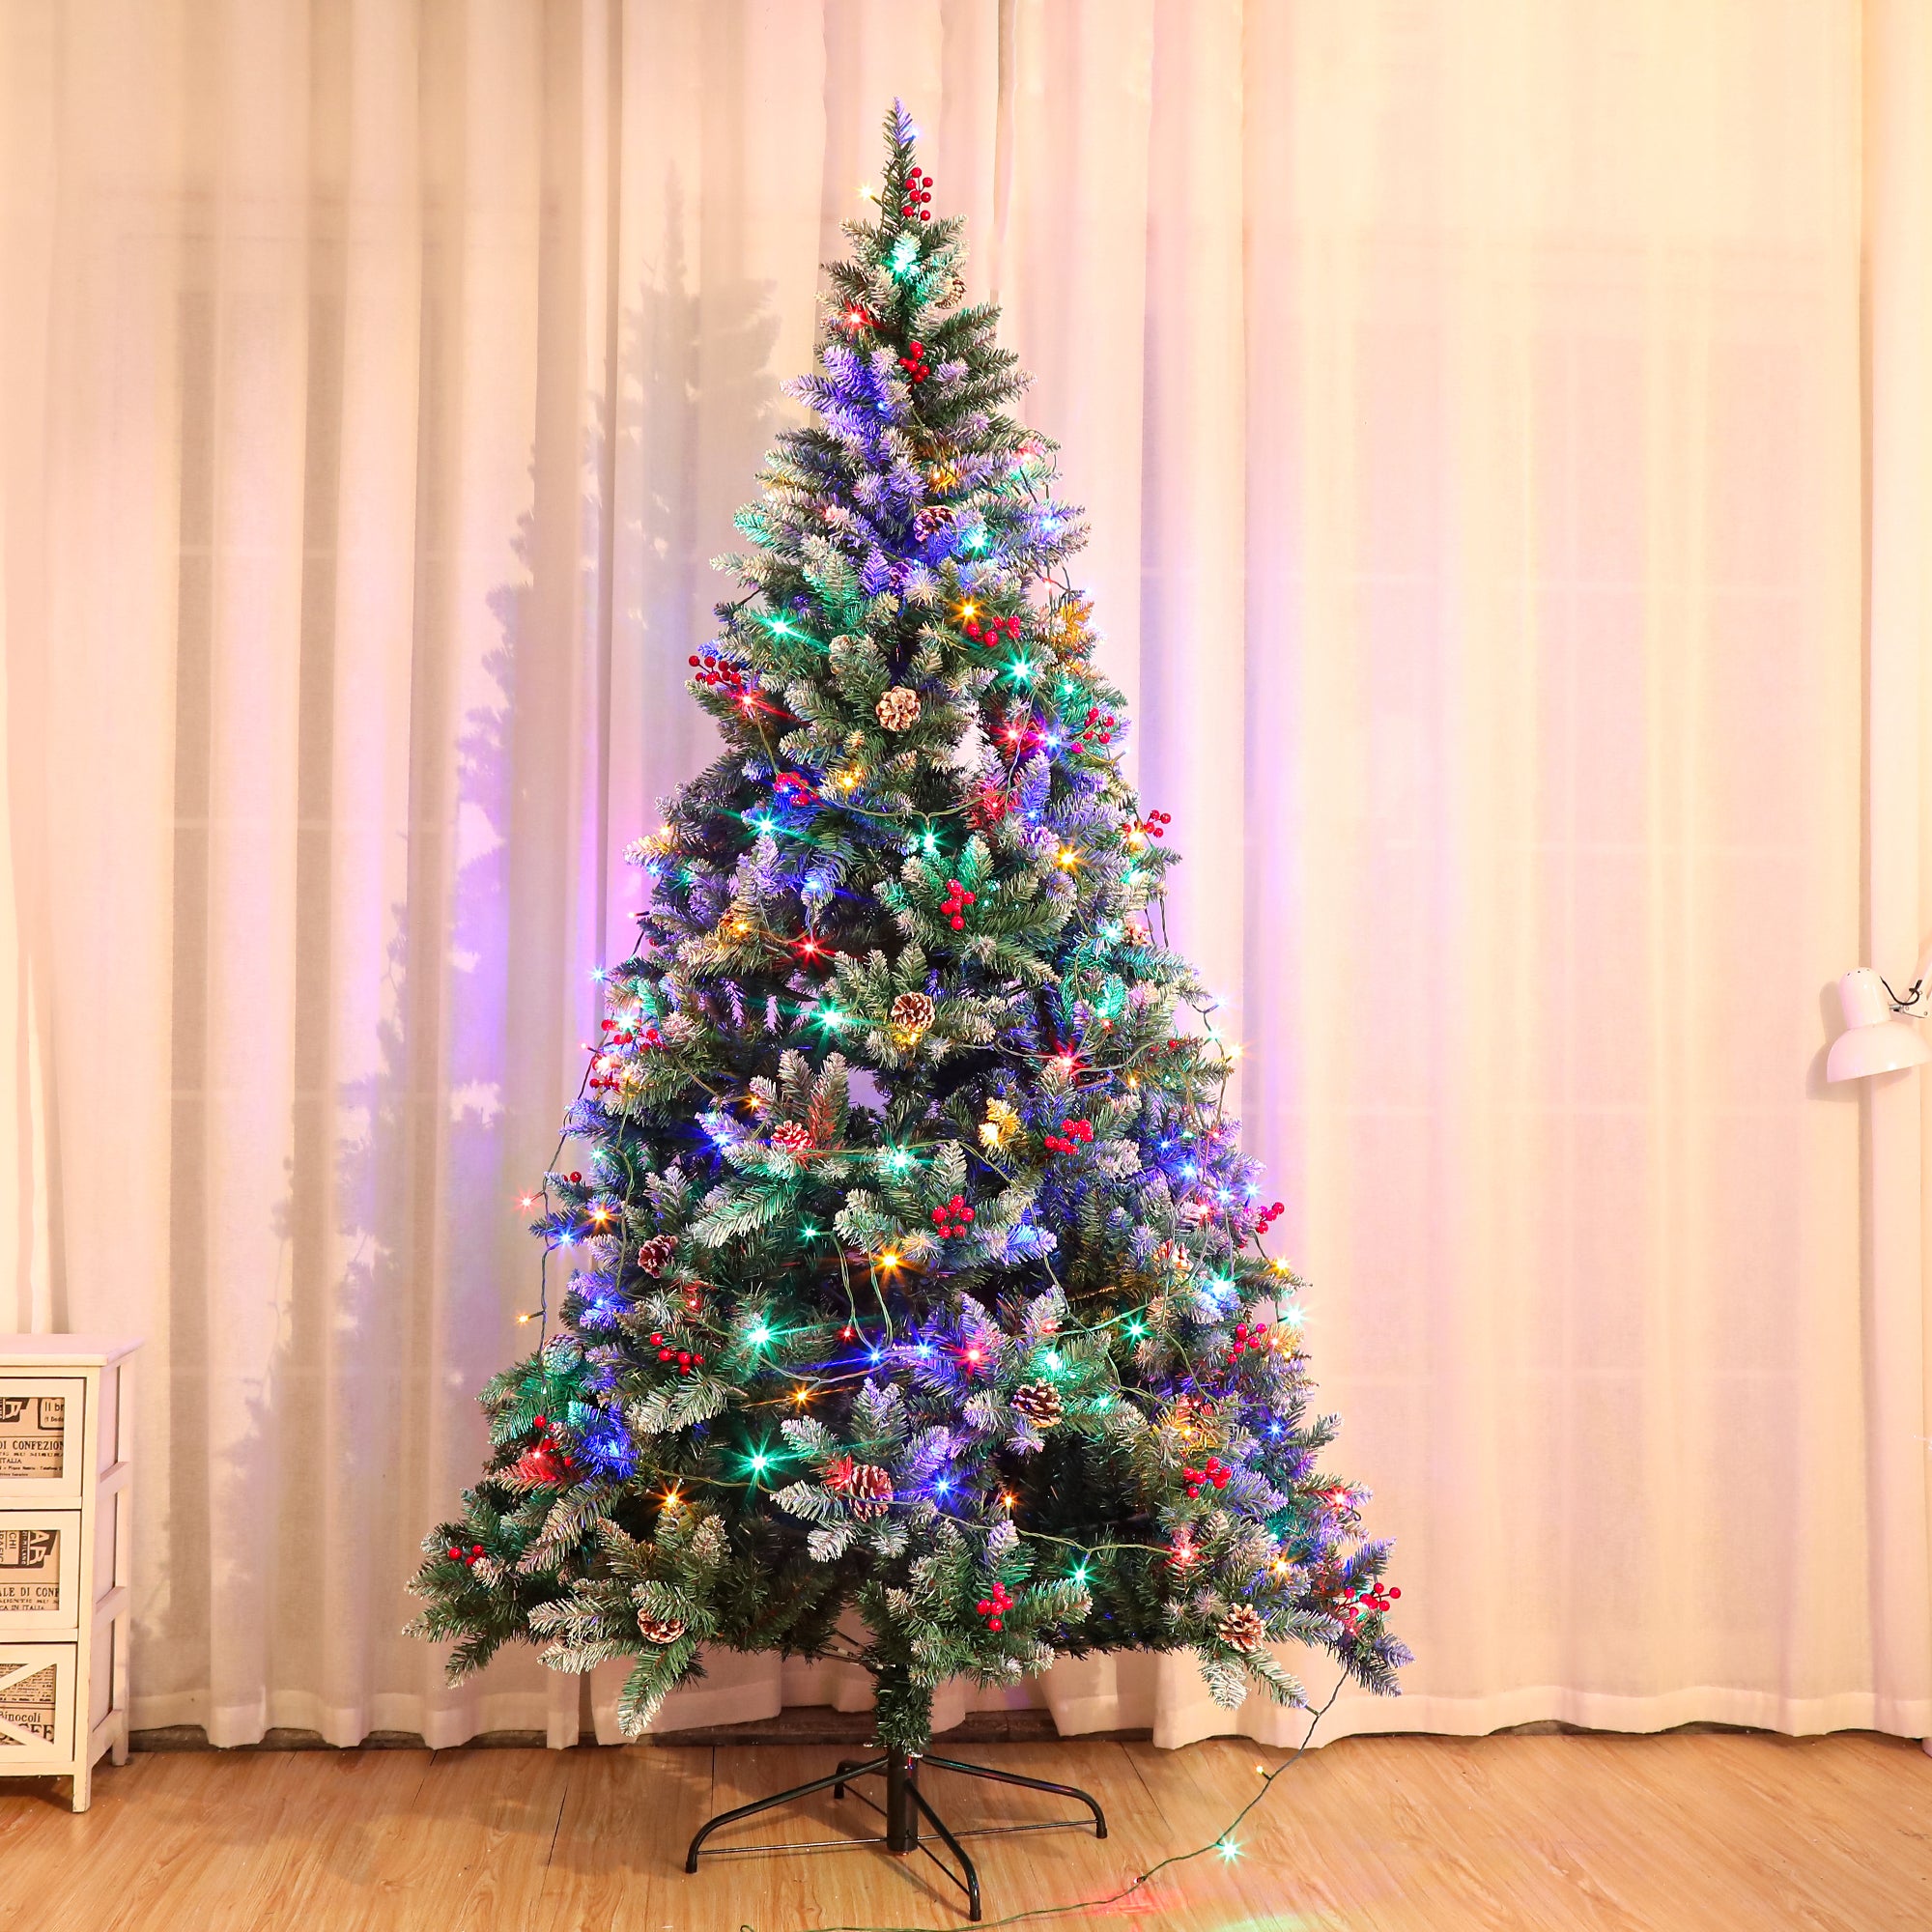 RaDEWAY Christmas Tree Artificial Full Xmas Trees with LED